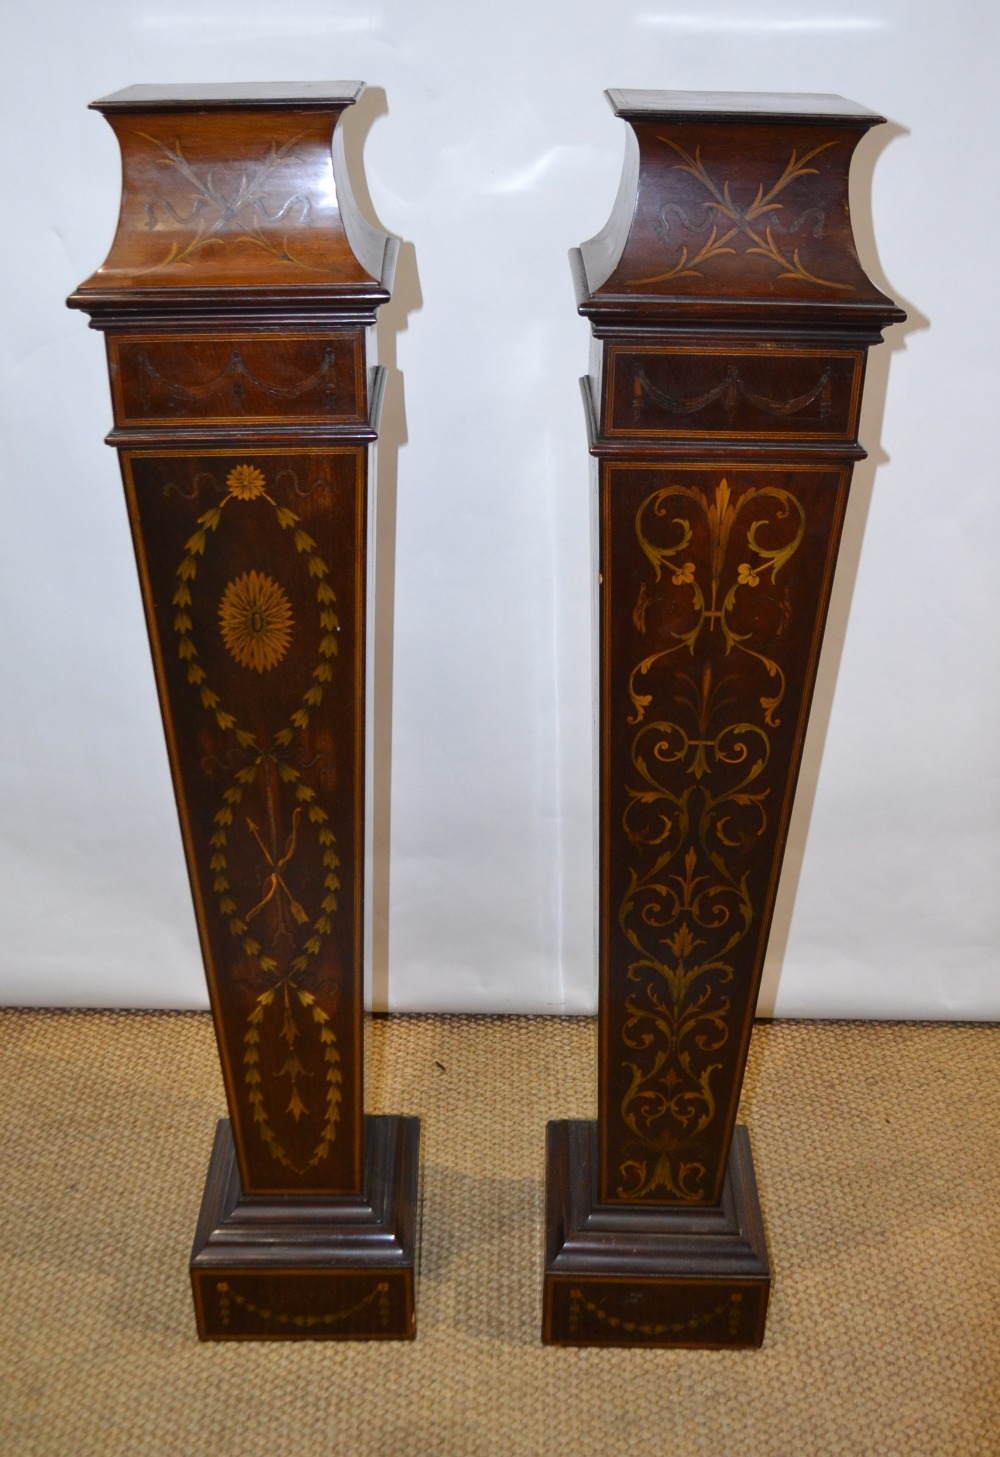 A pair of nineteenth century Sheraton Revival mahogany pedestals, inlaid marquetry foliage, Neo